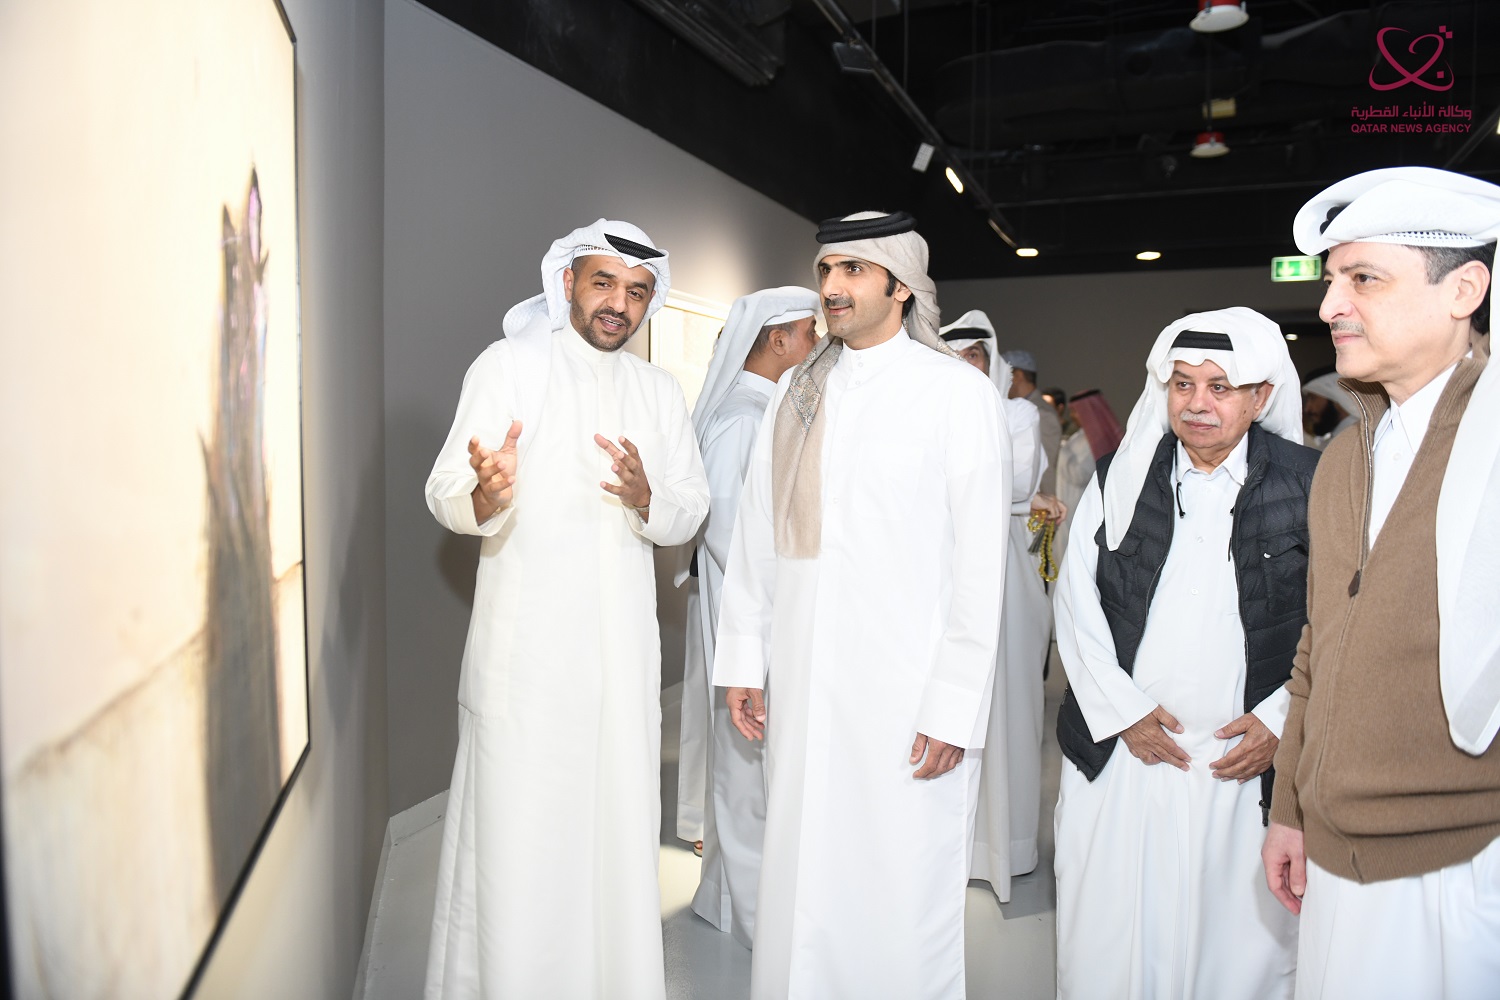 Minister of Culture Opens Gulf Art Gallery 6x6 in Katara